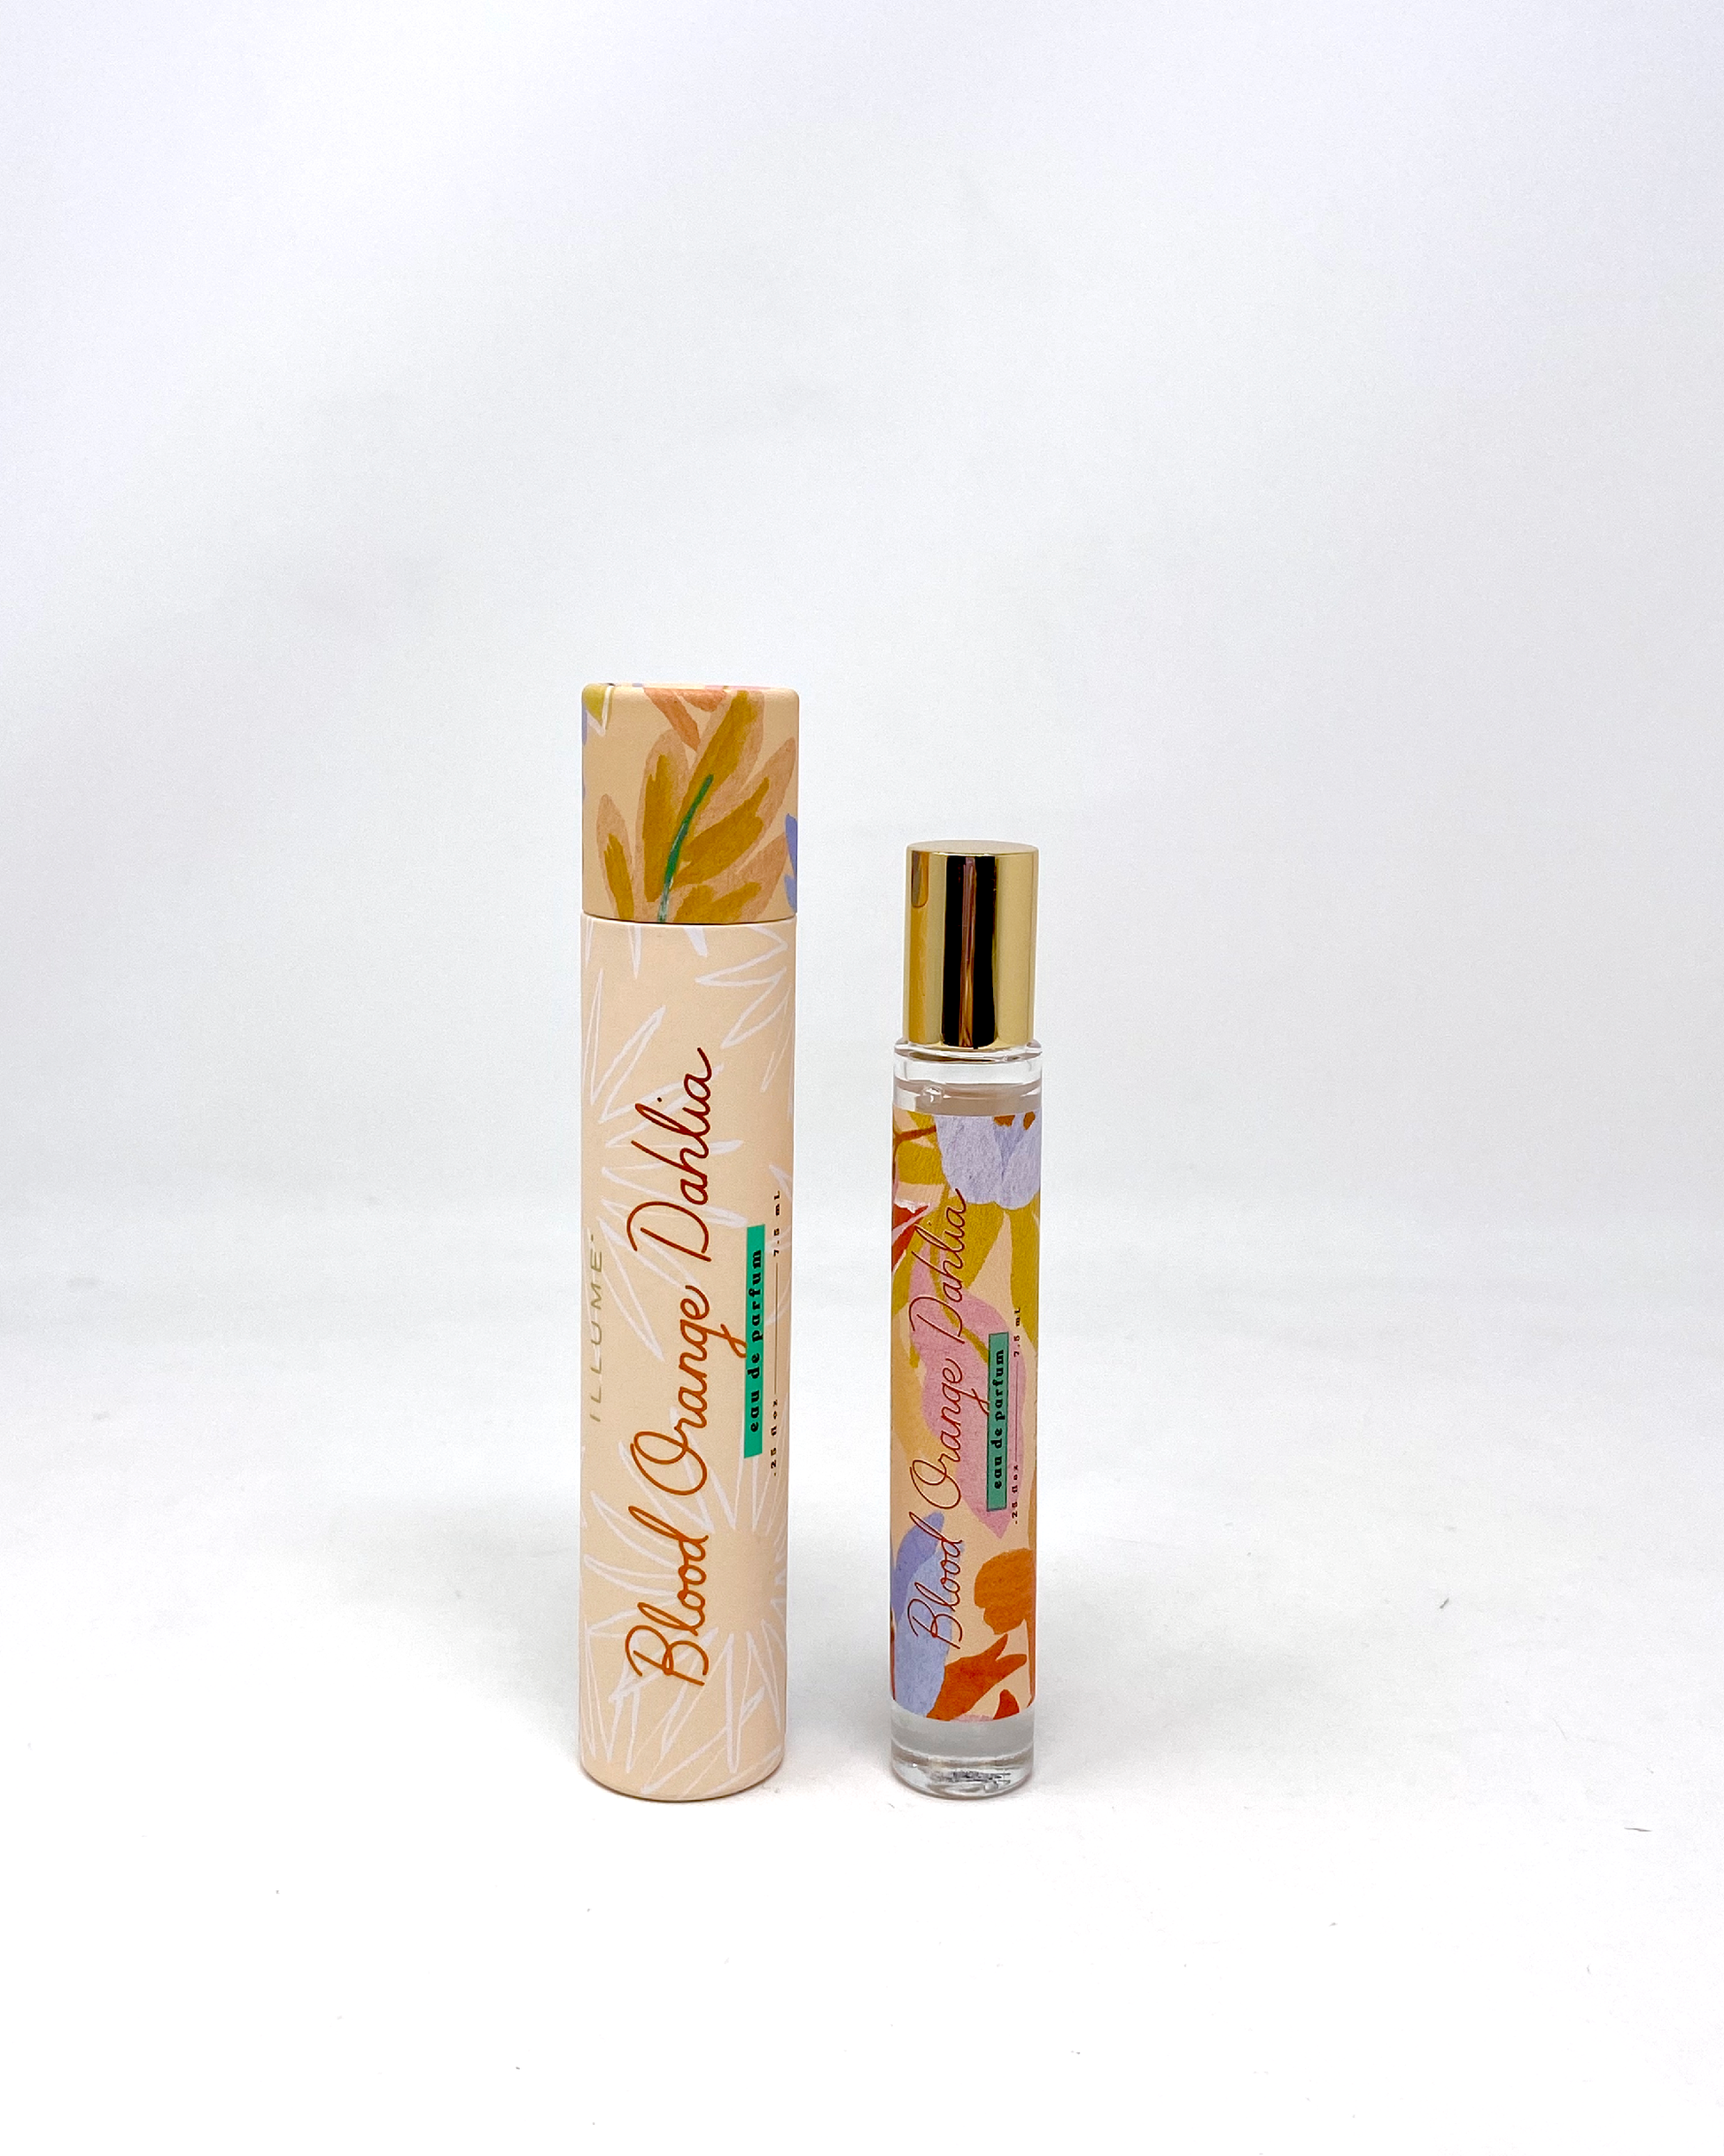 beautiful perfume rollers in four different scents. Blood Orange Dahlia, Coconut Milk Mango, La La Lavender, and Citrus Crush all smell divine!